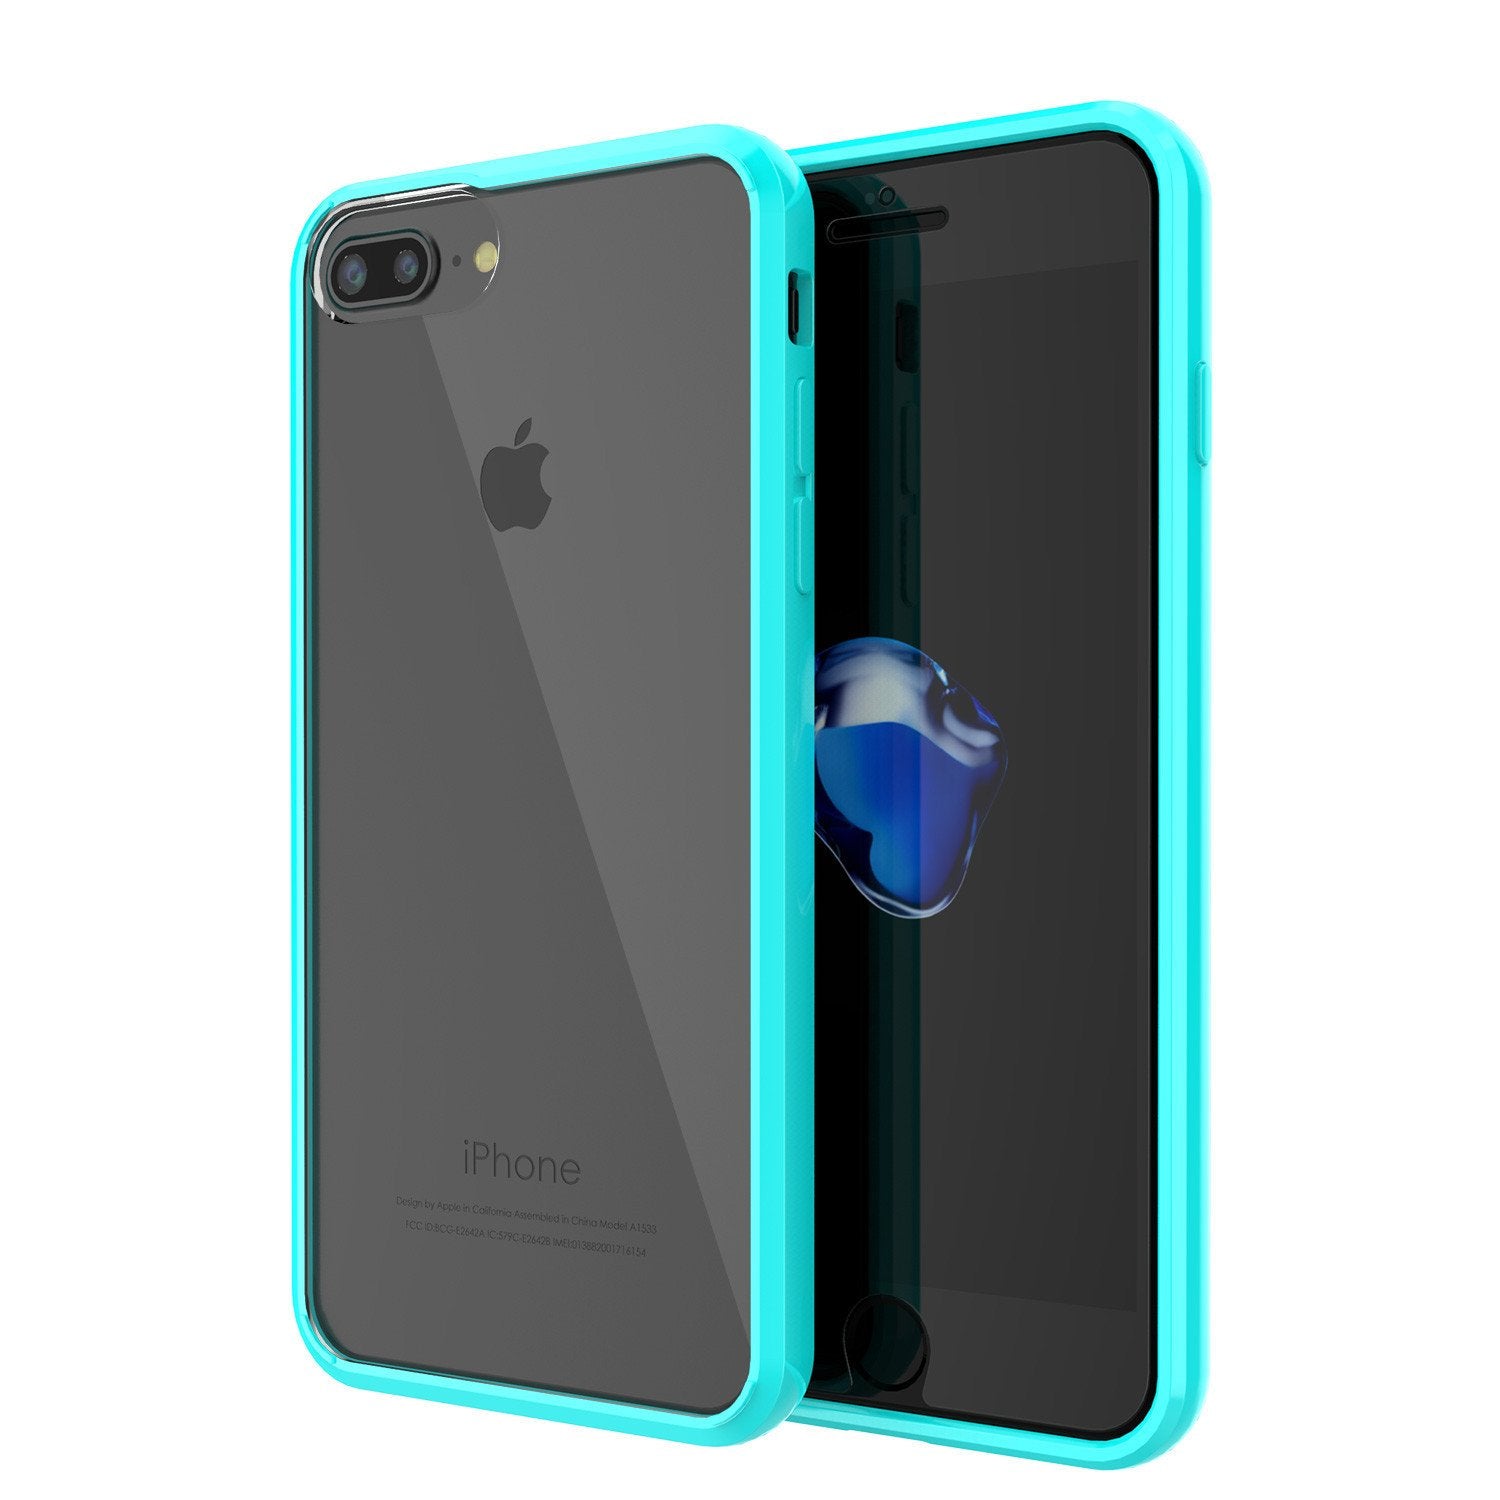 iPhone 7 Case Punkcase® LUCID 2.0 Teal Series for Apple iPhone 7 Slim | Slick Frame Lifetime Warranty Exchange